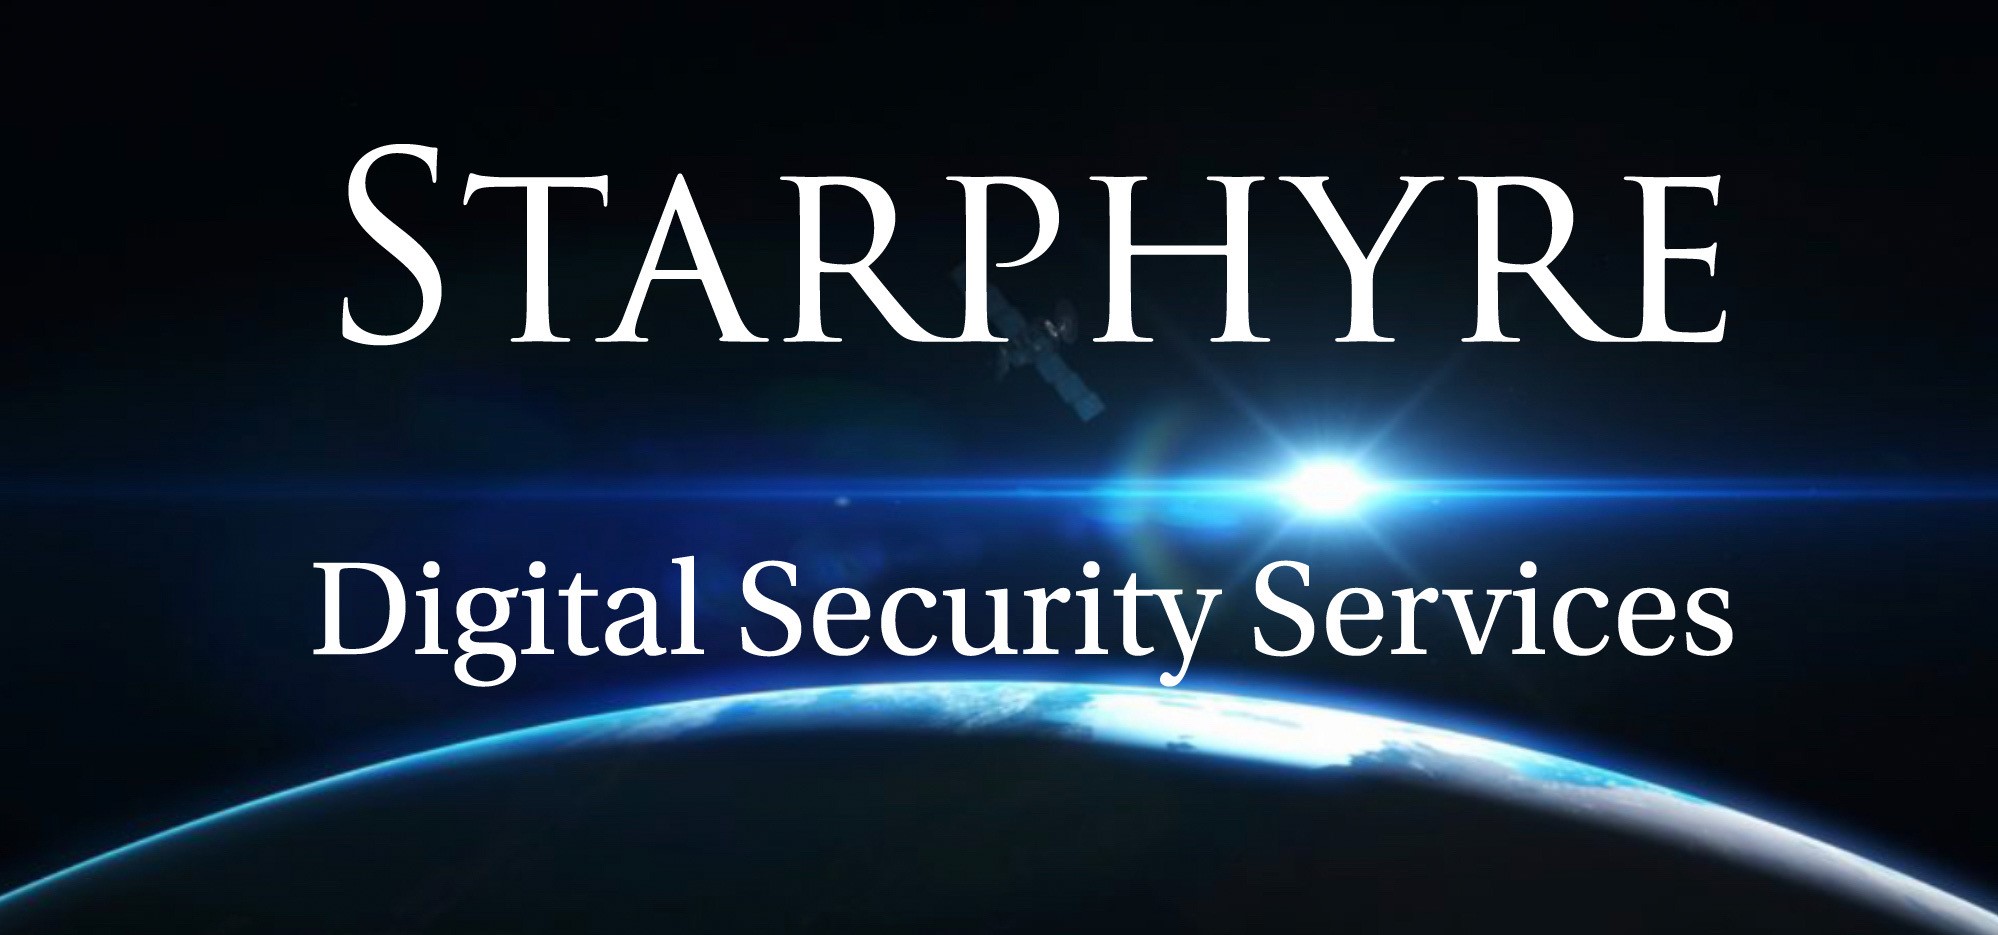 Starphyre Digital Security Services 